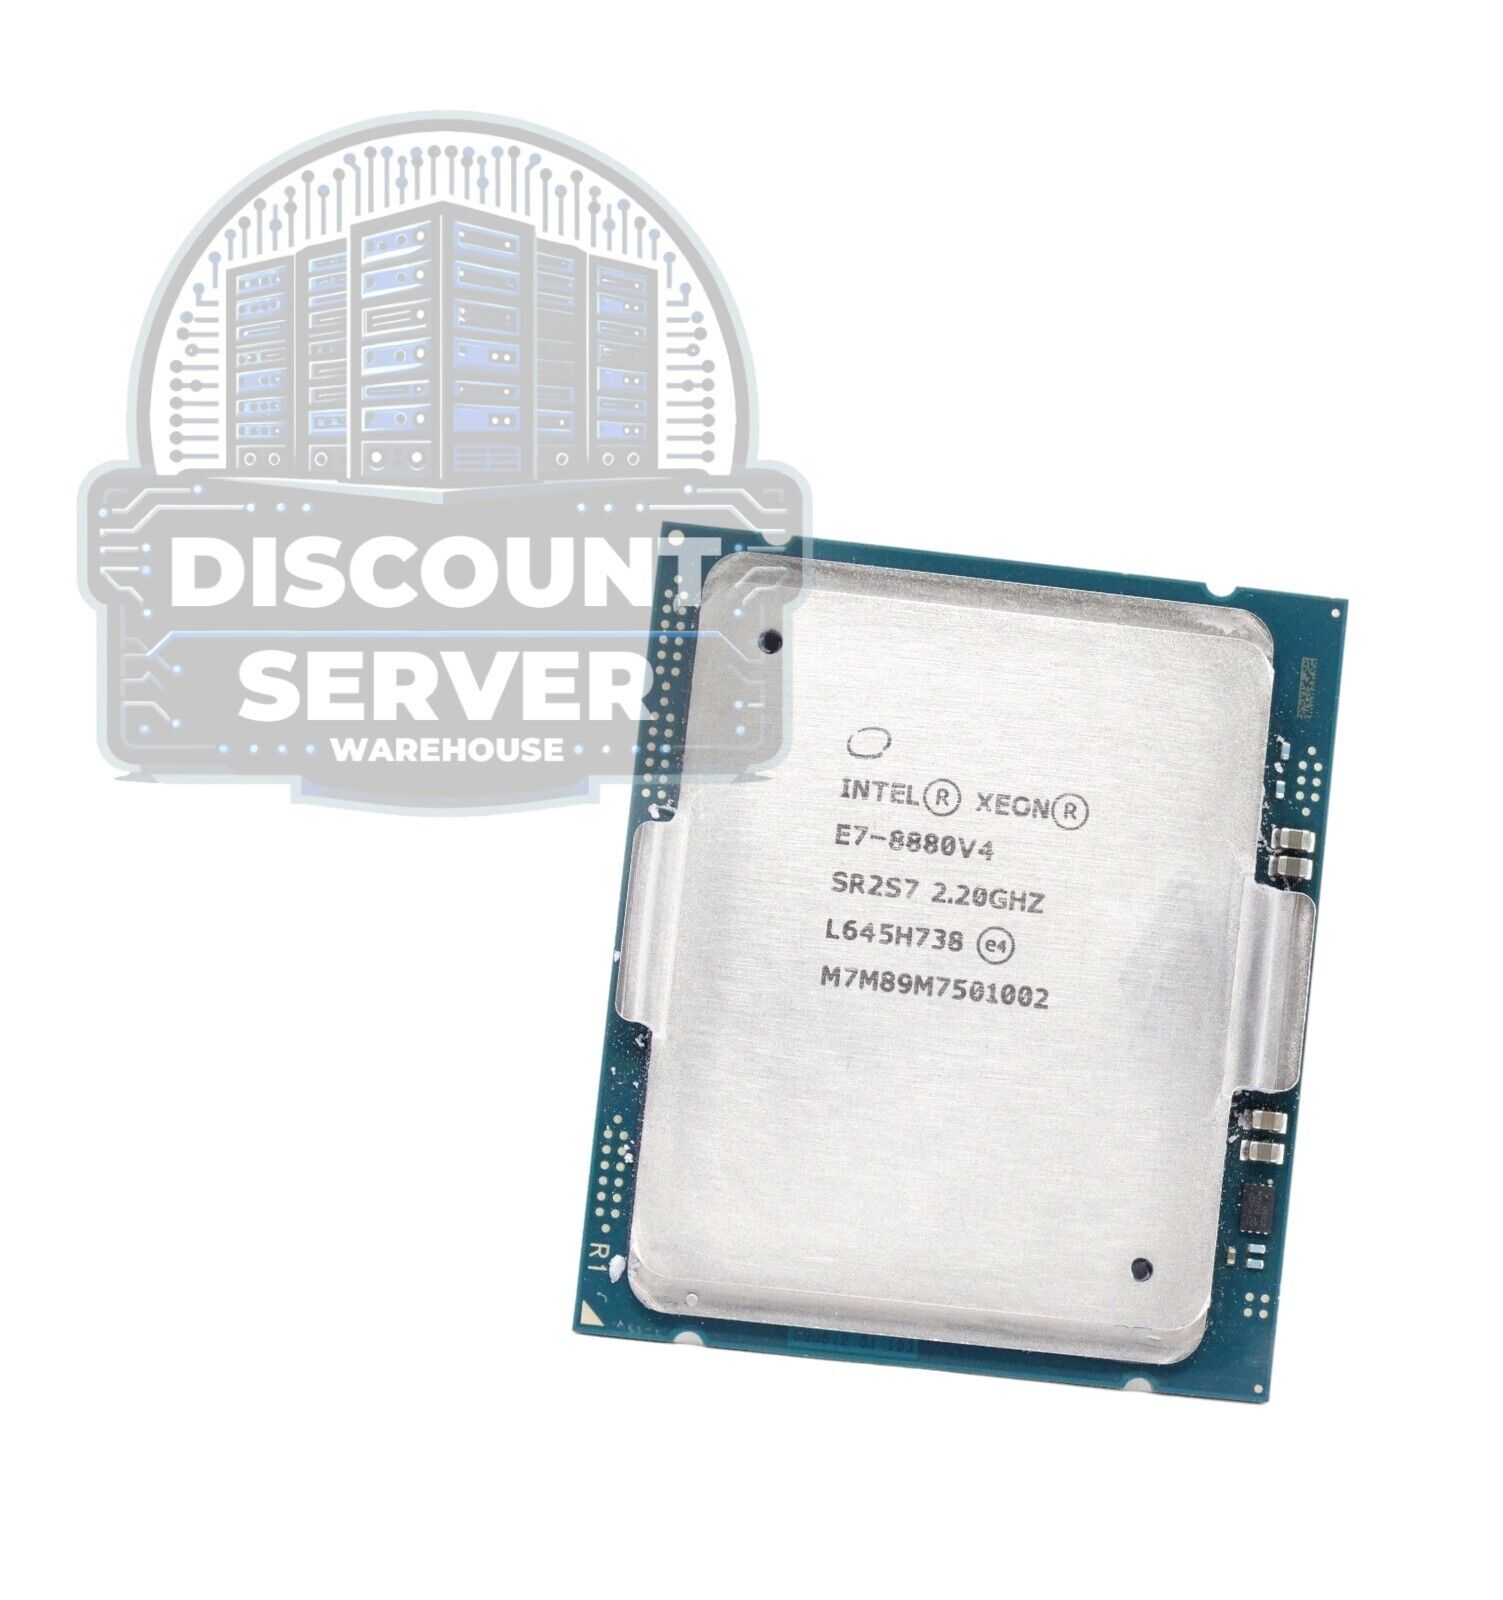 Intel Xeon E7-8880v4 22C 2.2G 150W 1866Mhz -SR2S7